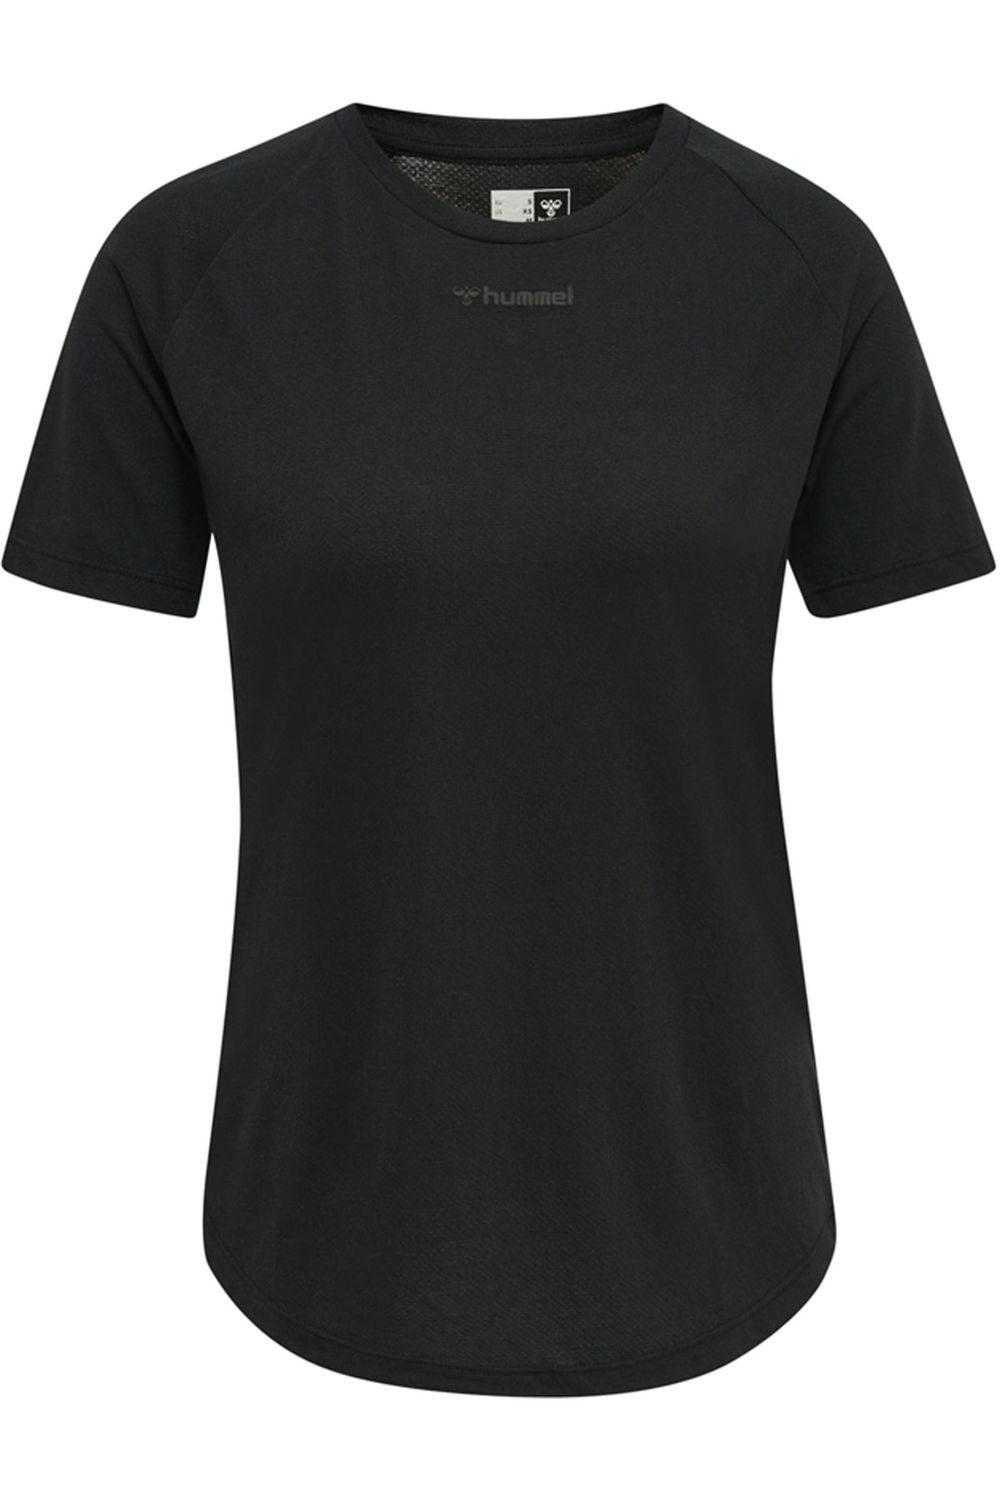 HUMMEL T-Shirt - Regular Trendyol - Fit Braun 